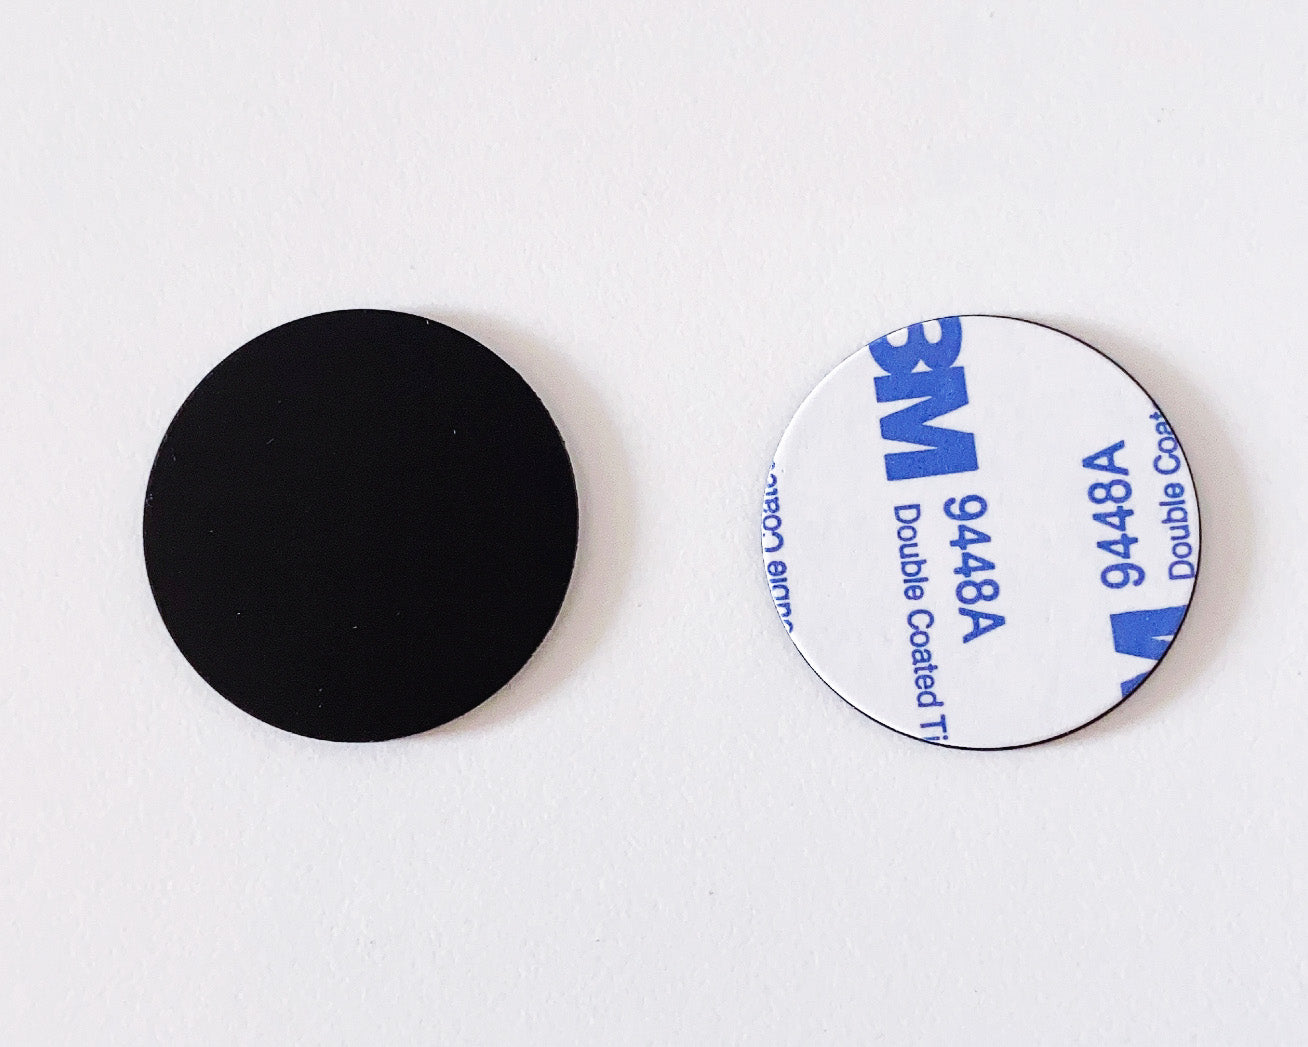 NFC Card - NXP NTAG213 (black PVC) 